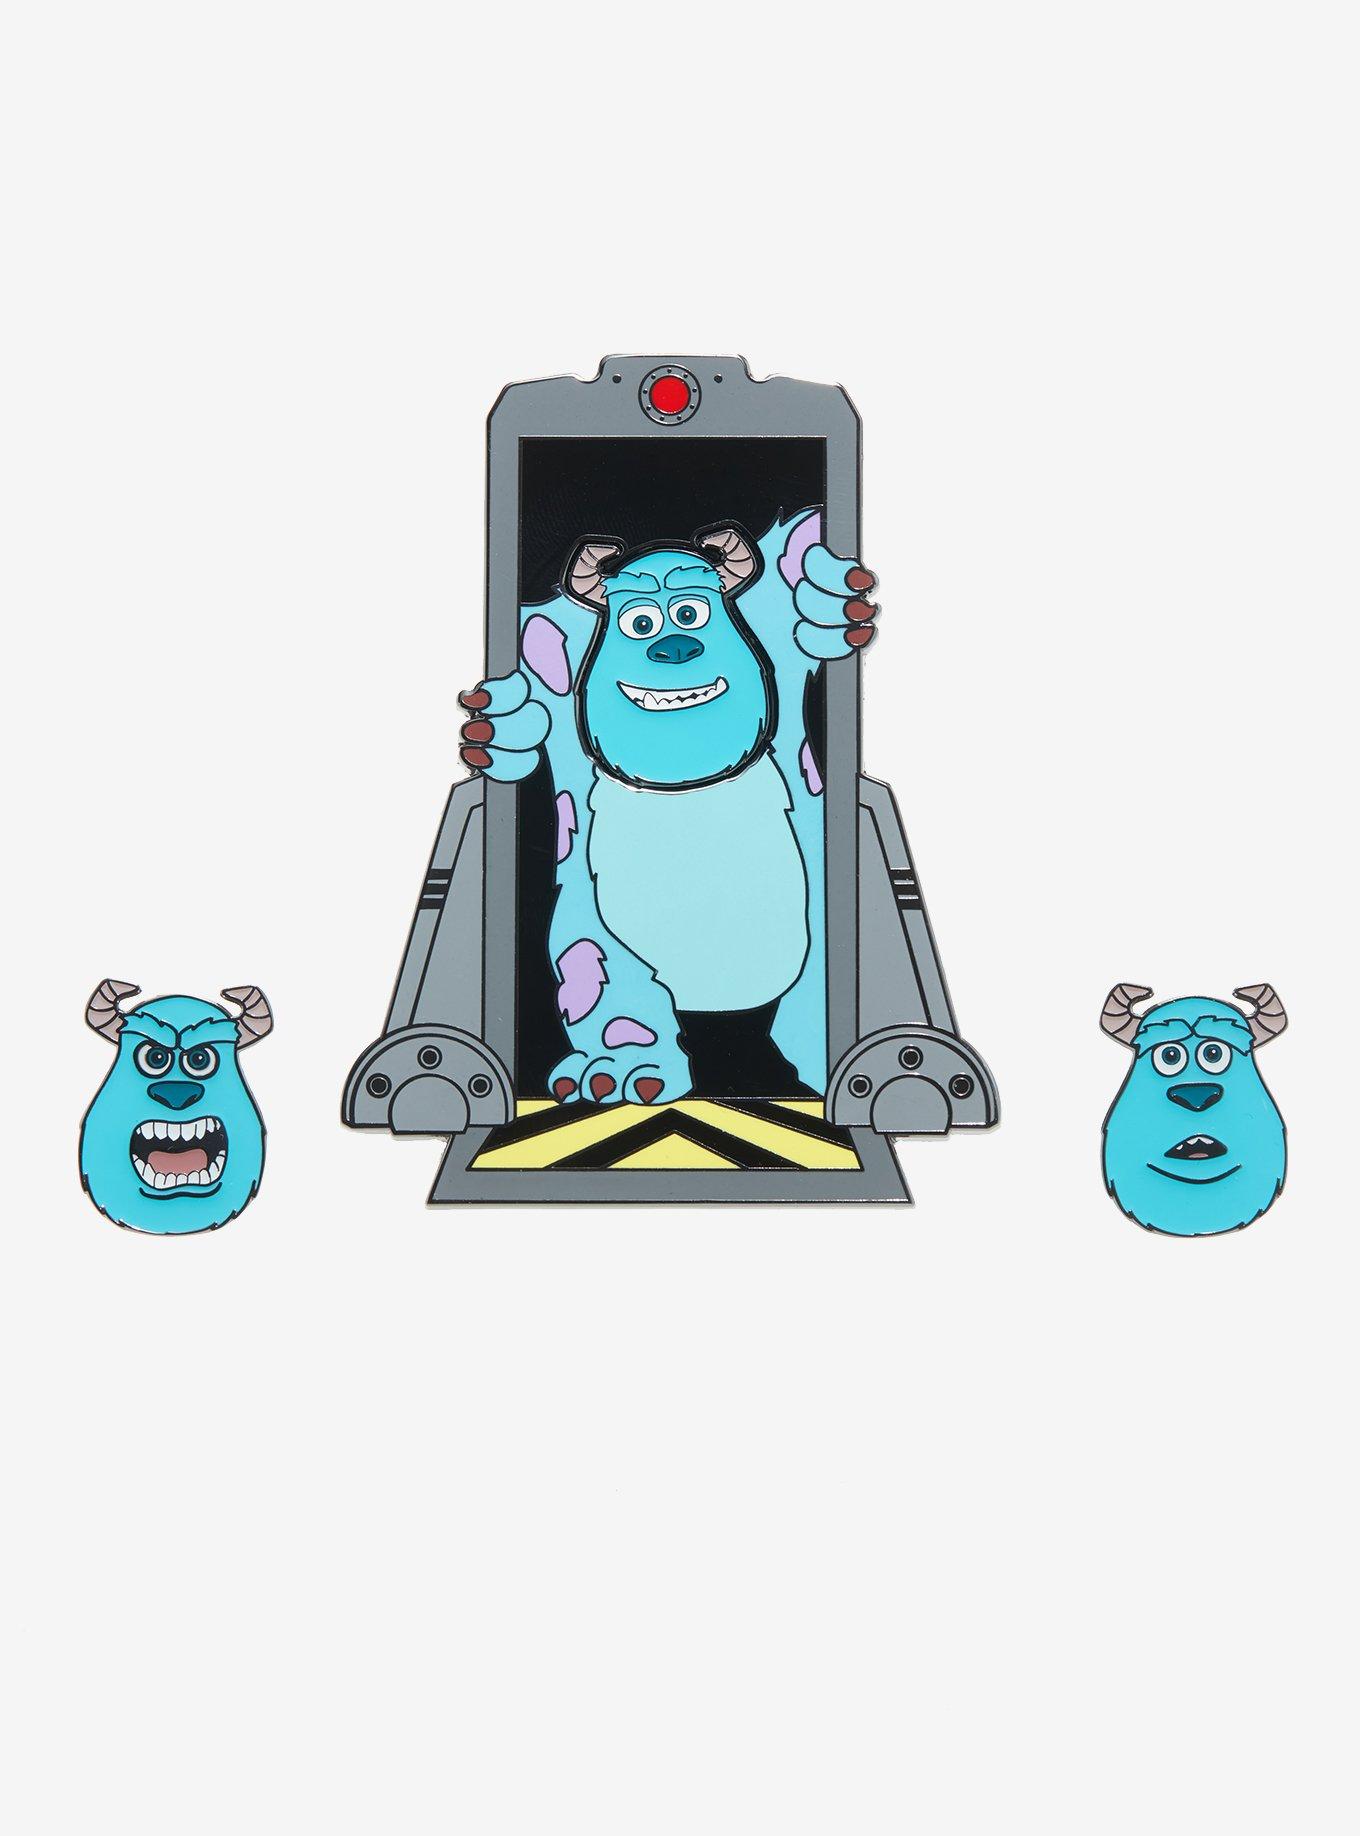 Loungefly Disney Pixar Monsters, Inc. Boo Mini Backpack